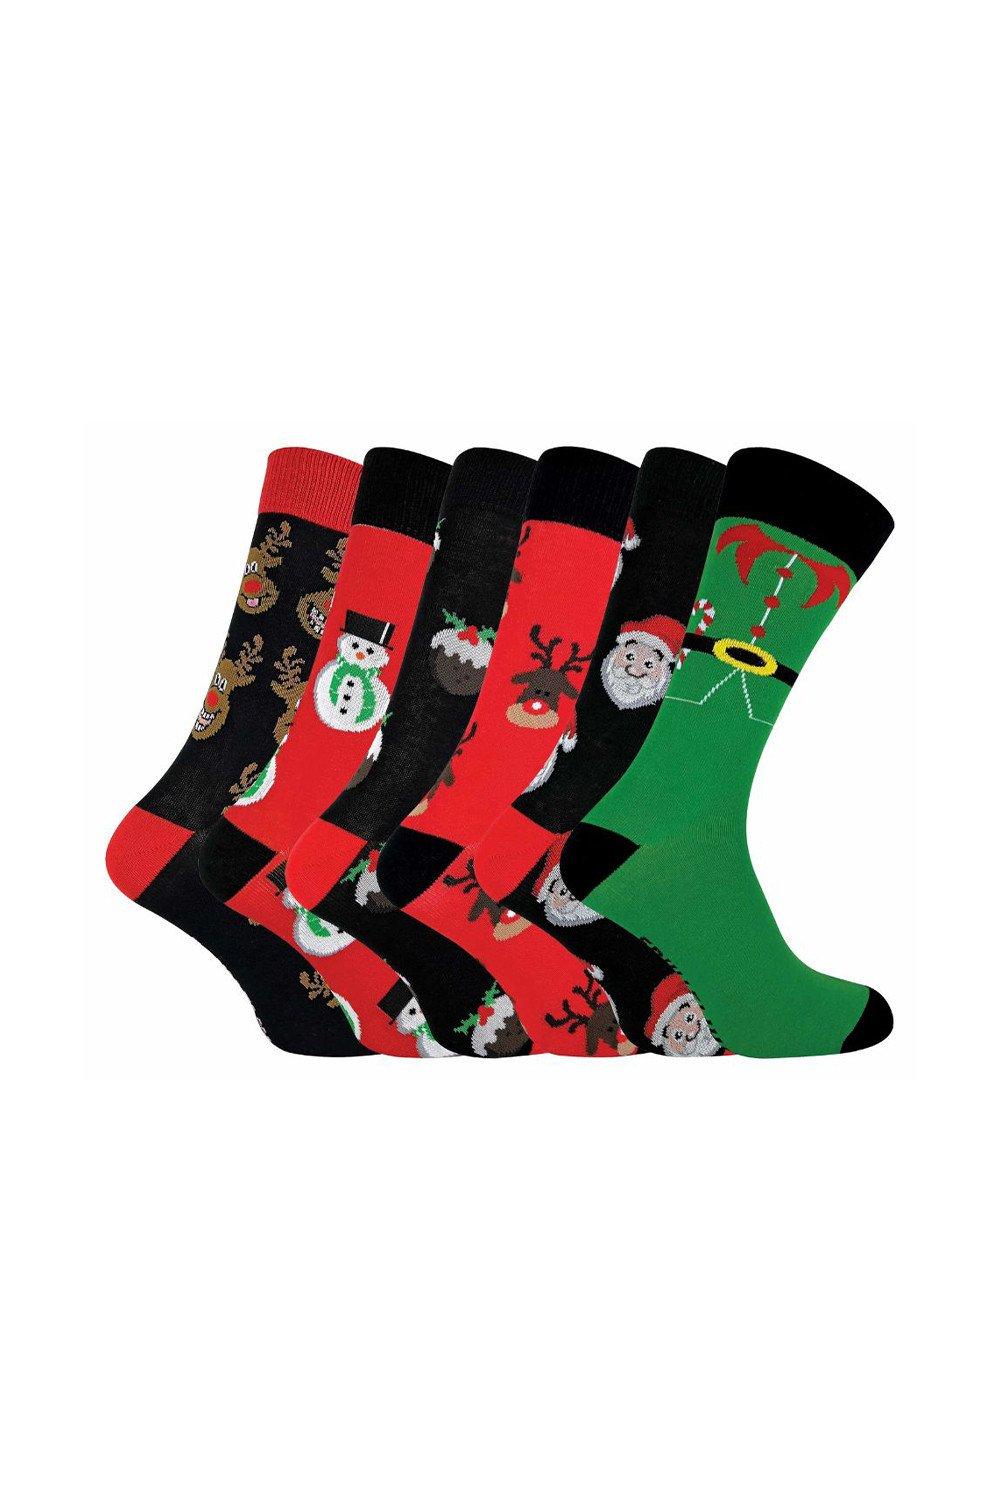 6 Pairs Cotton Rich Fun Novelty Design Christmas Socks